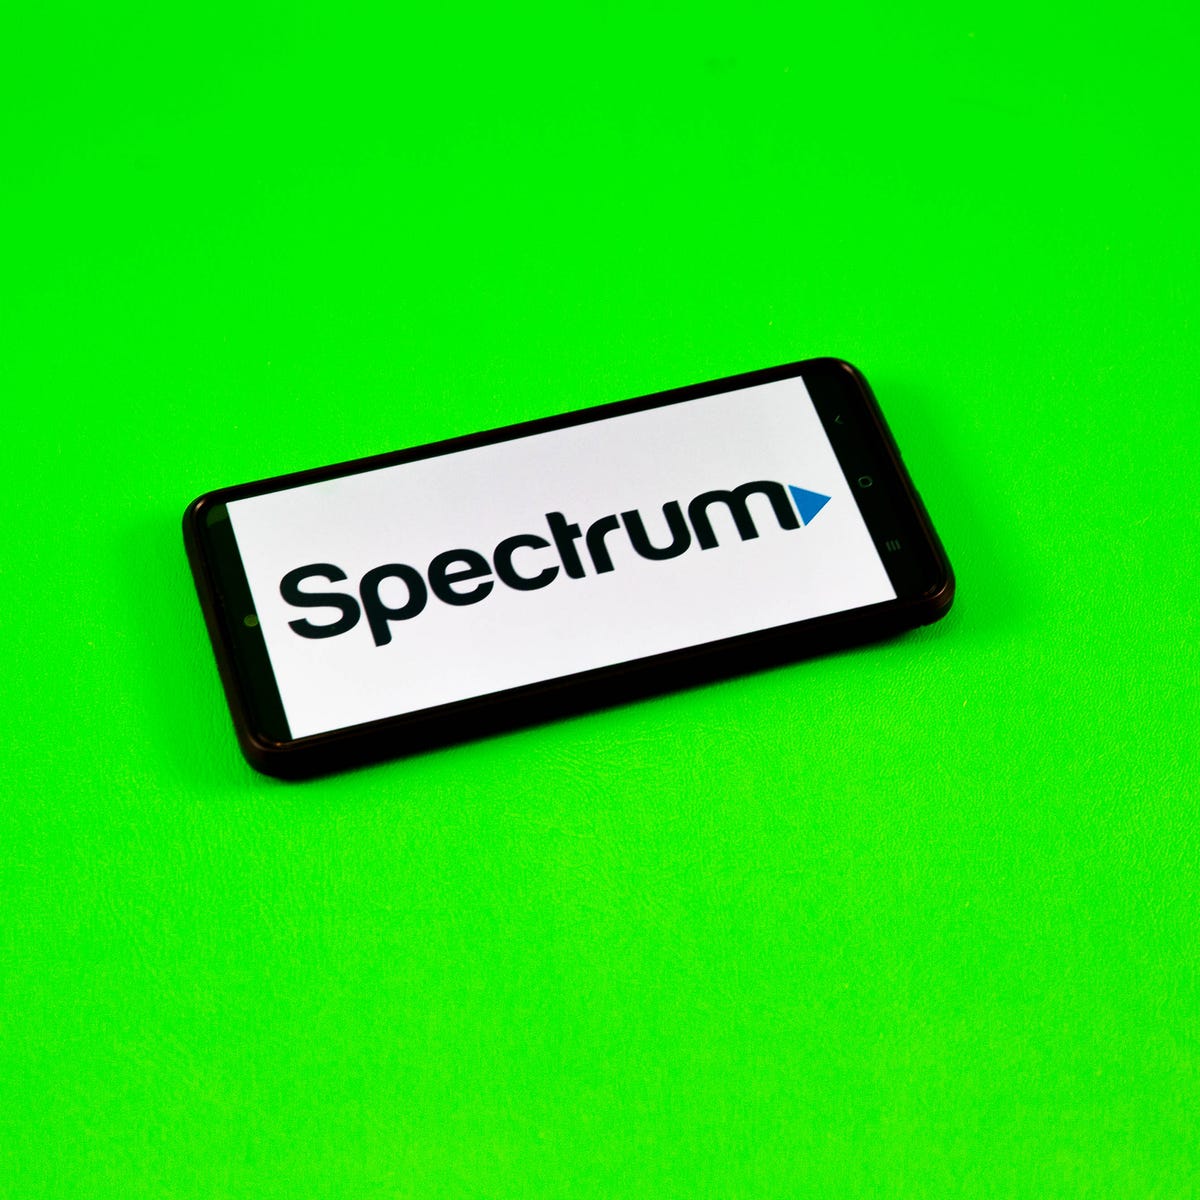 Is Spectrum Throttling My Internet